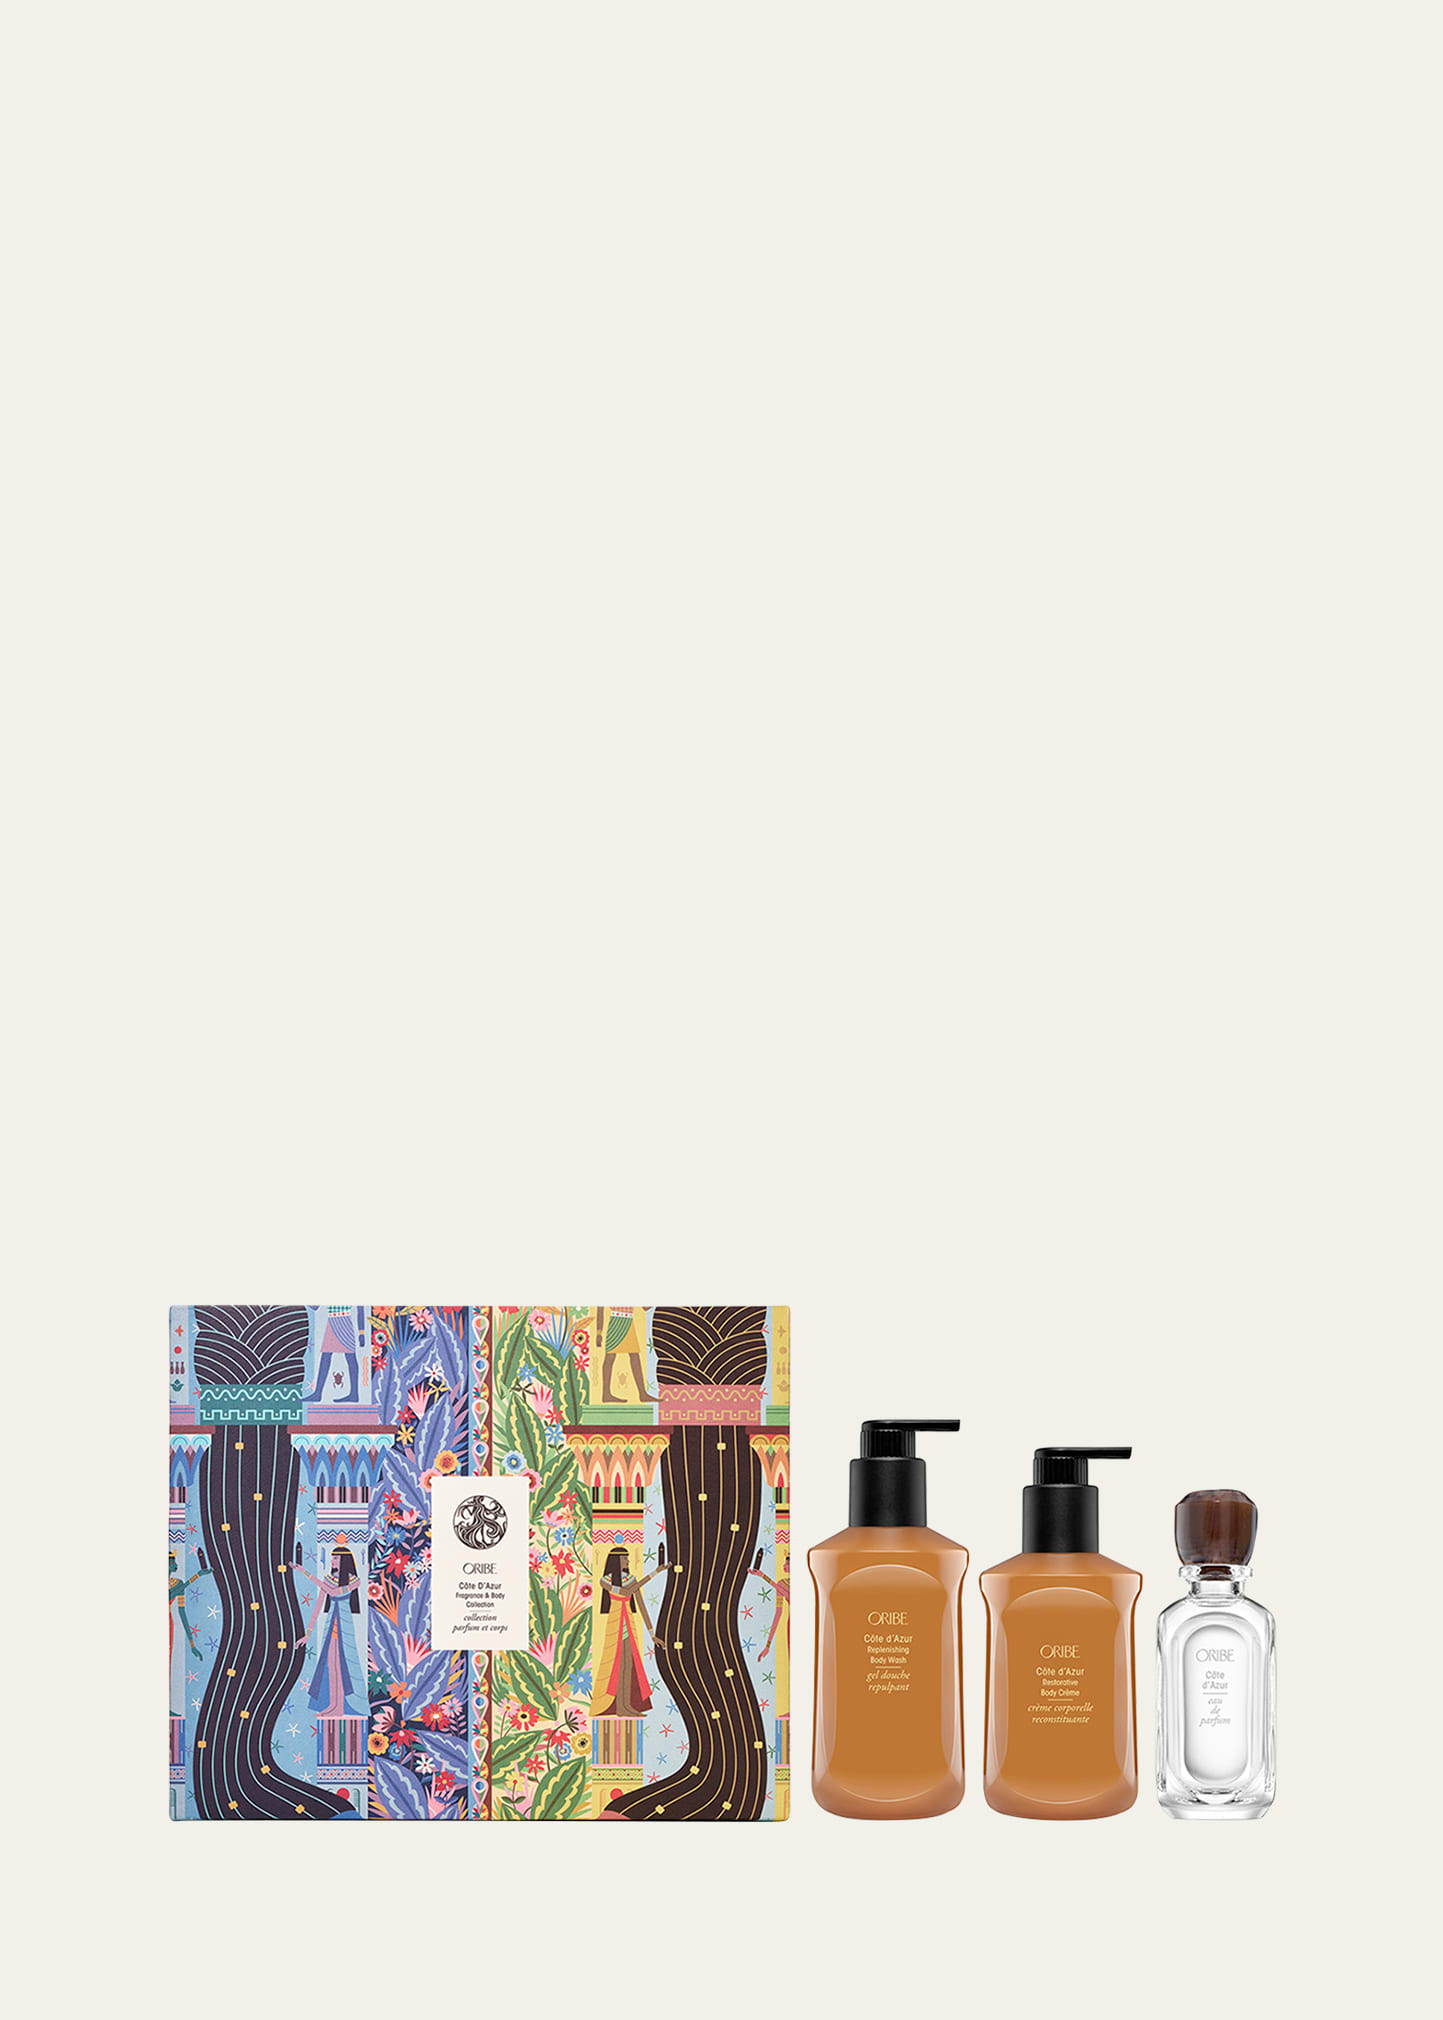 Cote dAzur Fragrance & Body Collection ($238 Value)